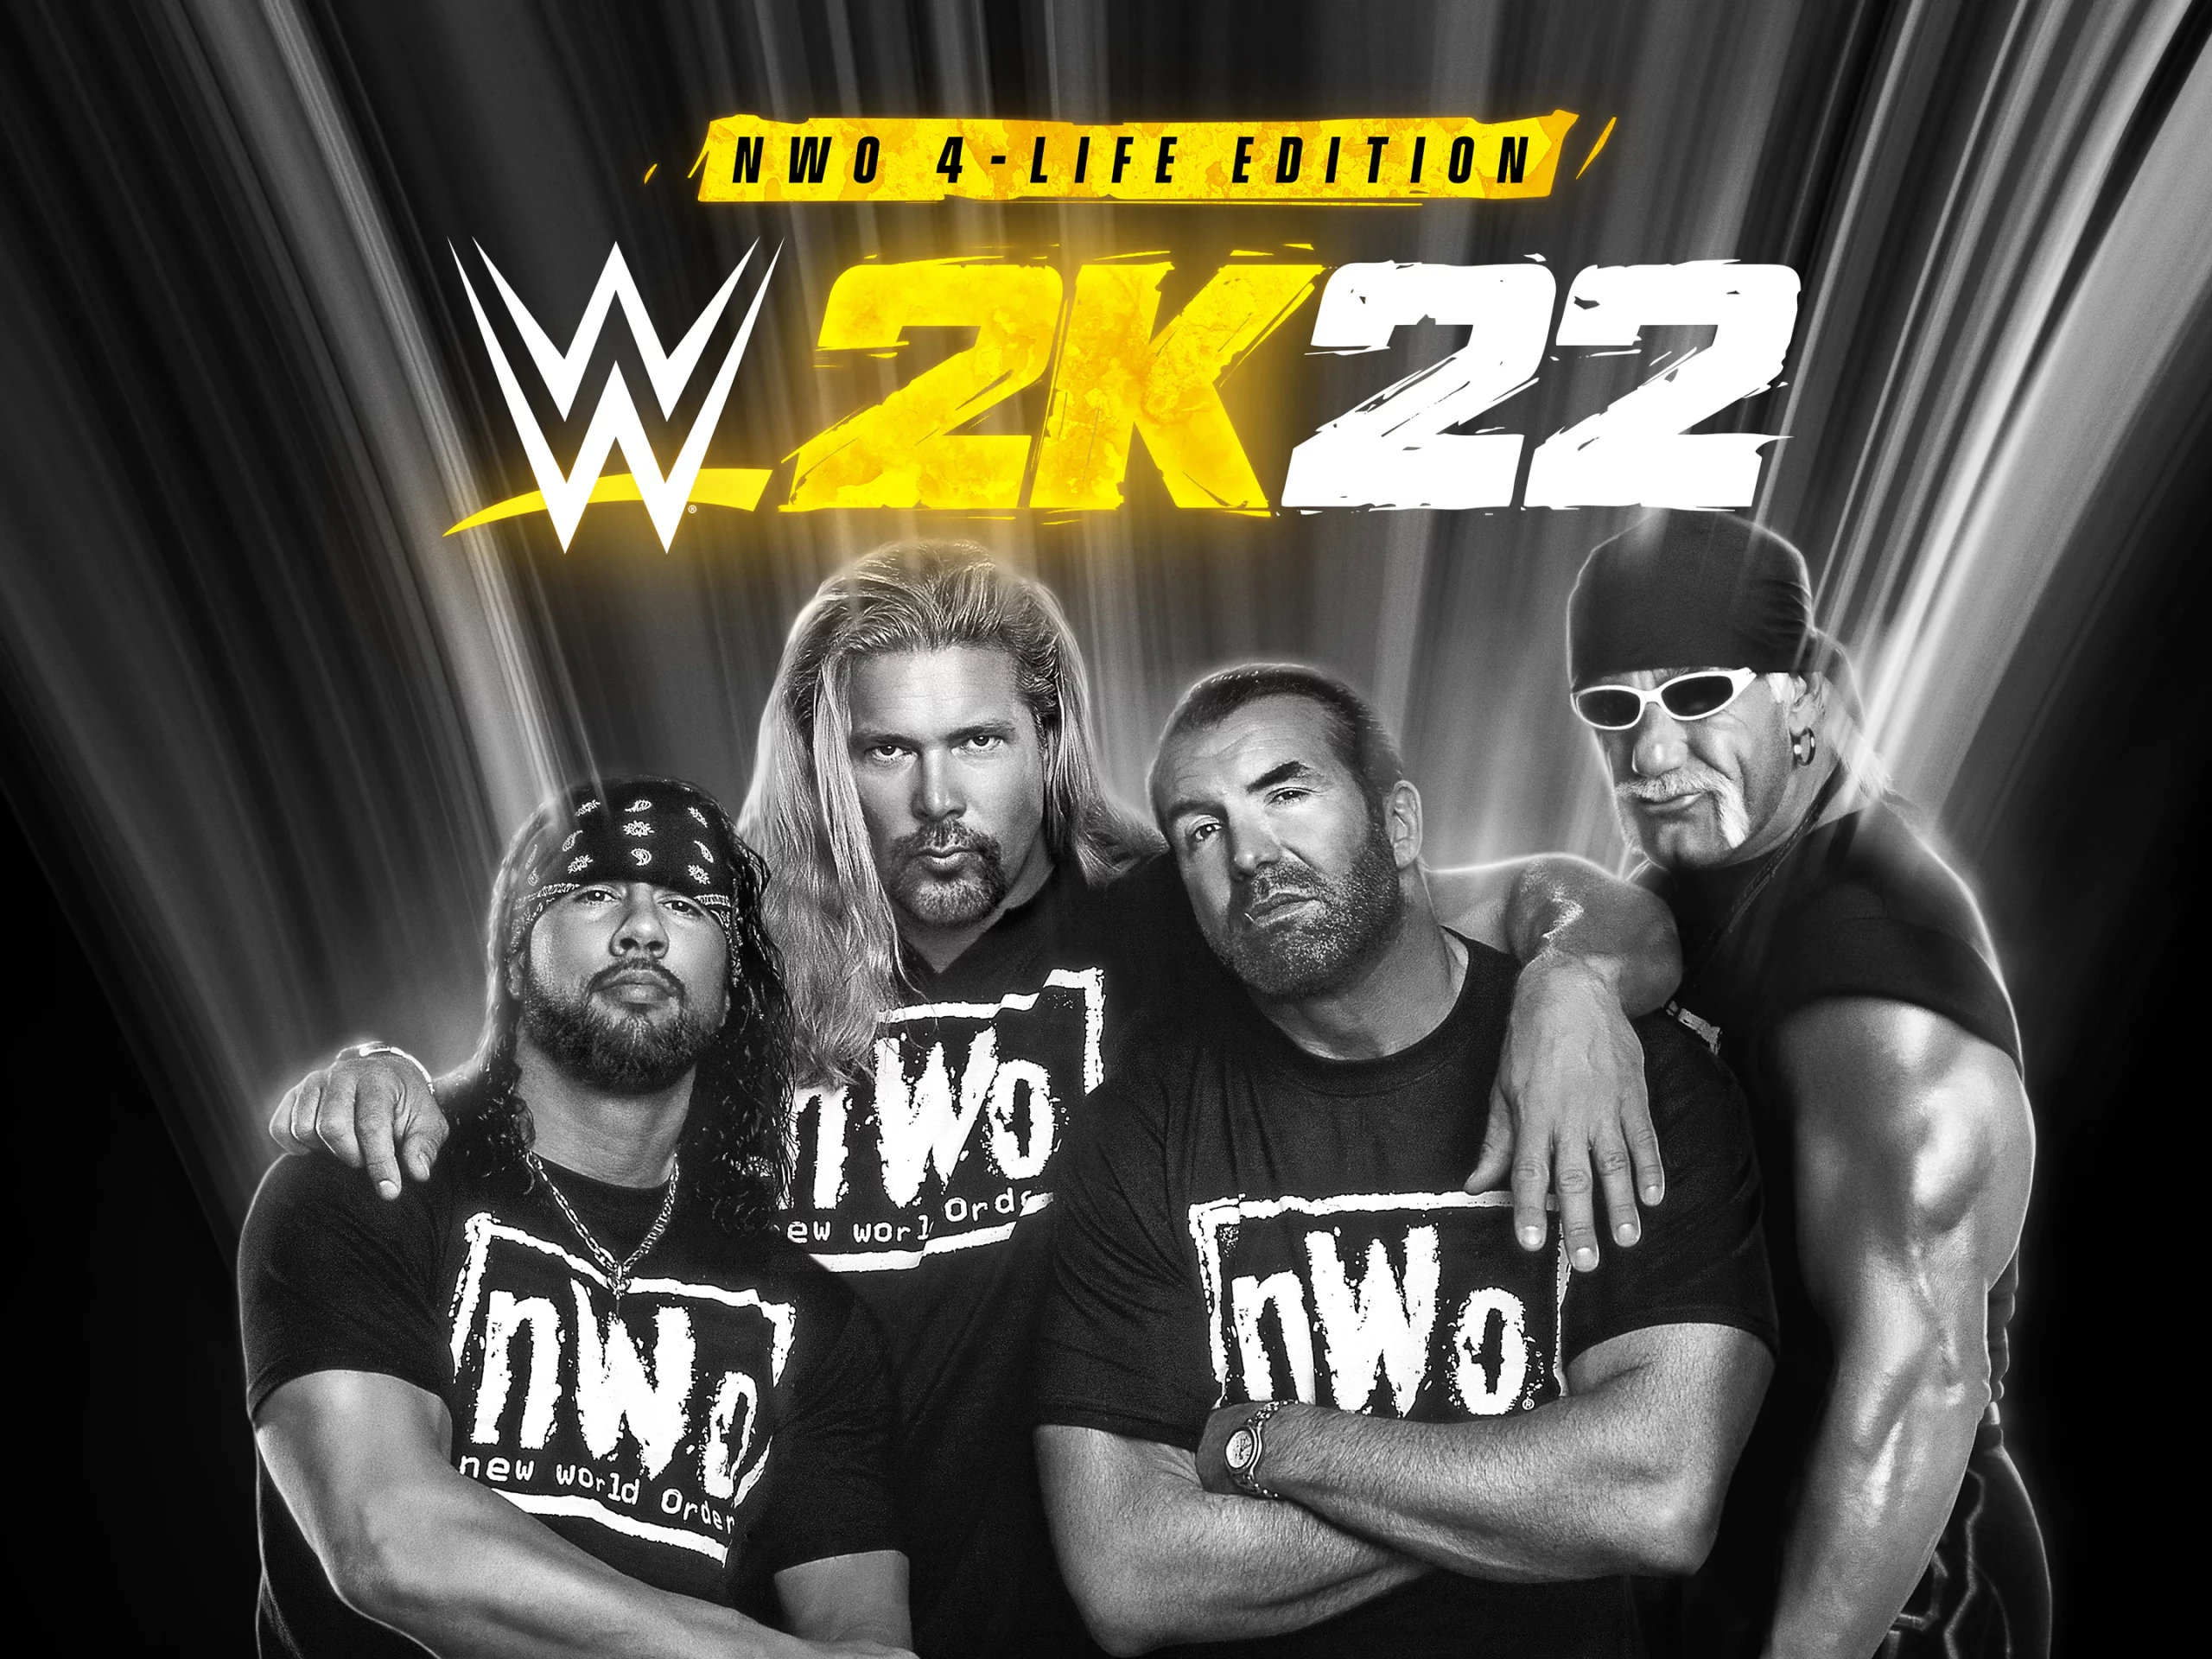 Edition WWE 2k22 Nwo